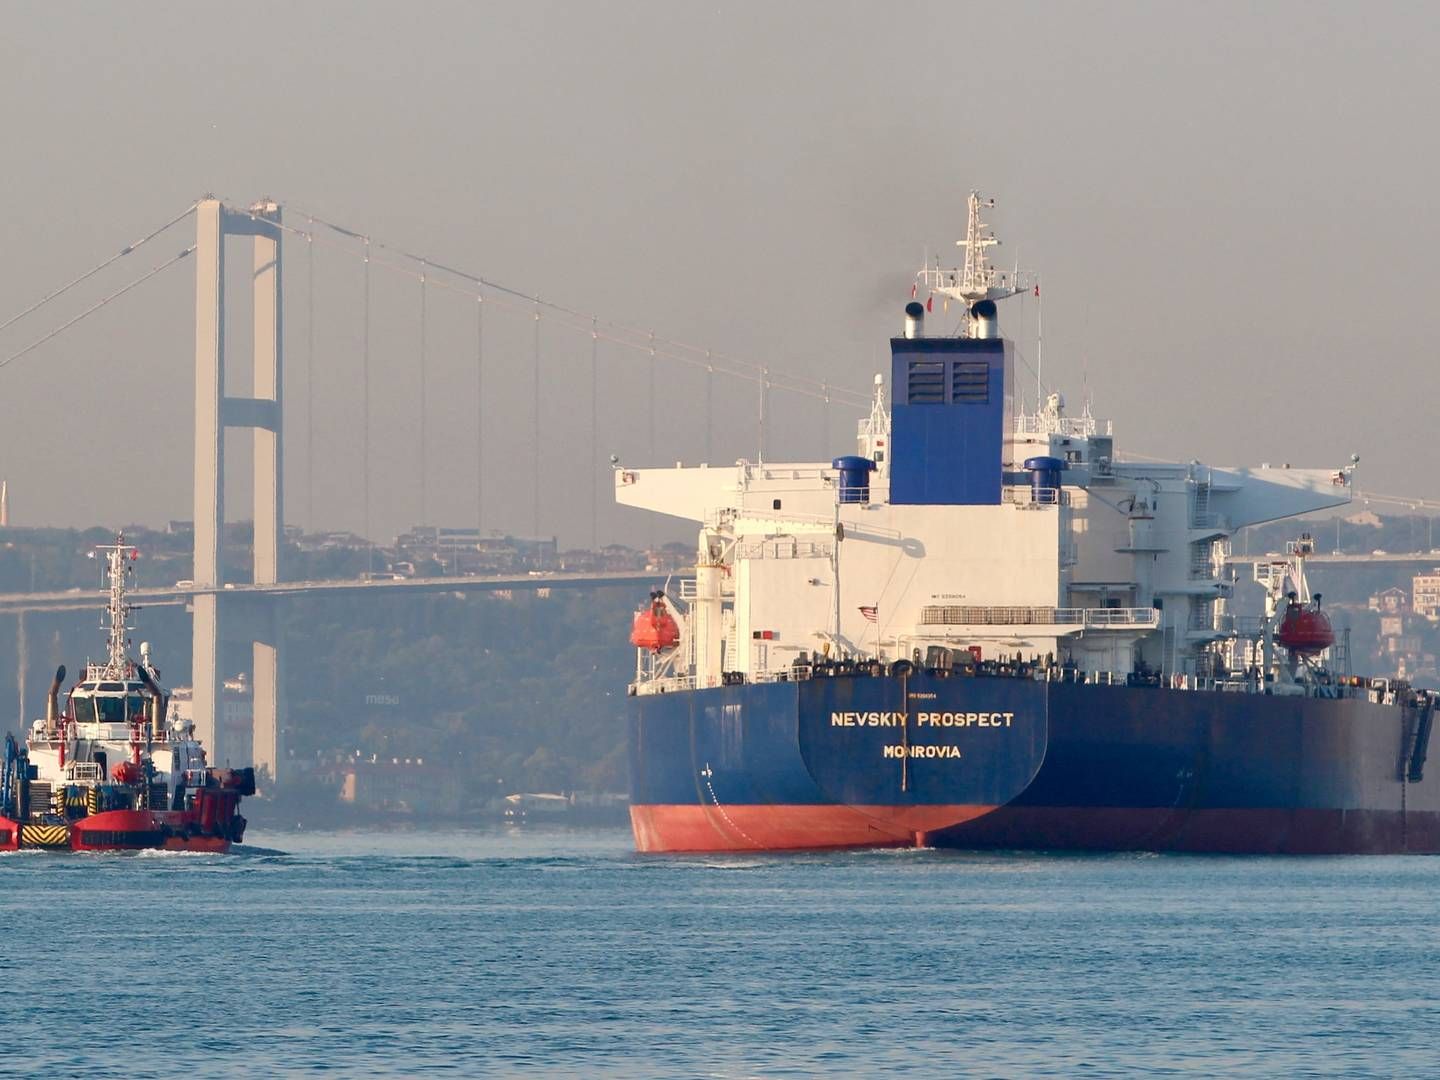 A Sovcomflot tanker sails through the Bosphorus Strait near Istanbul.